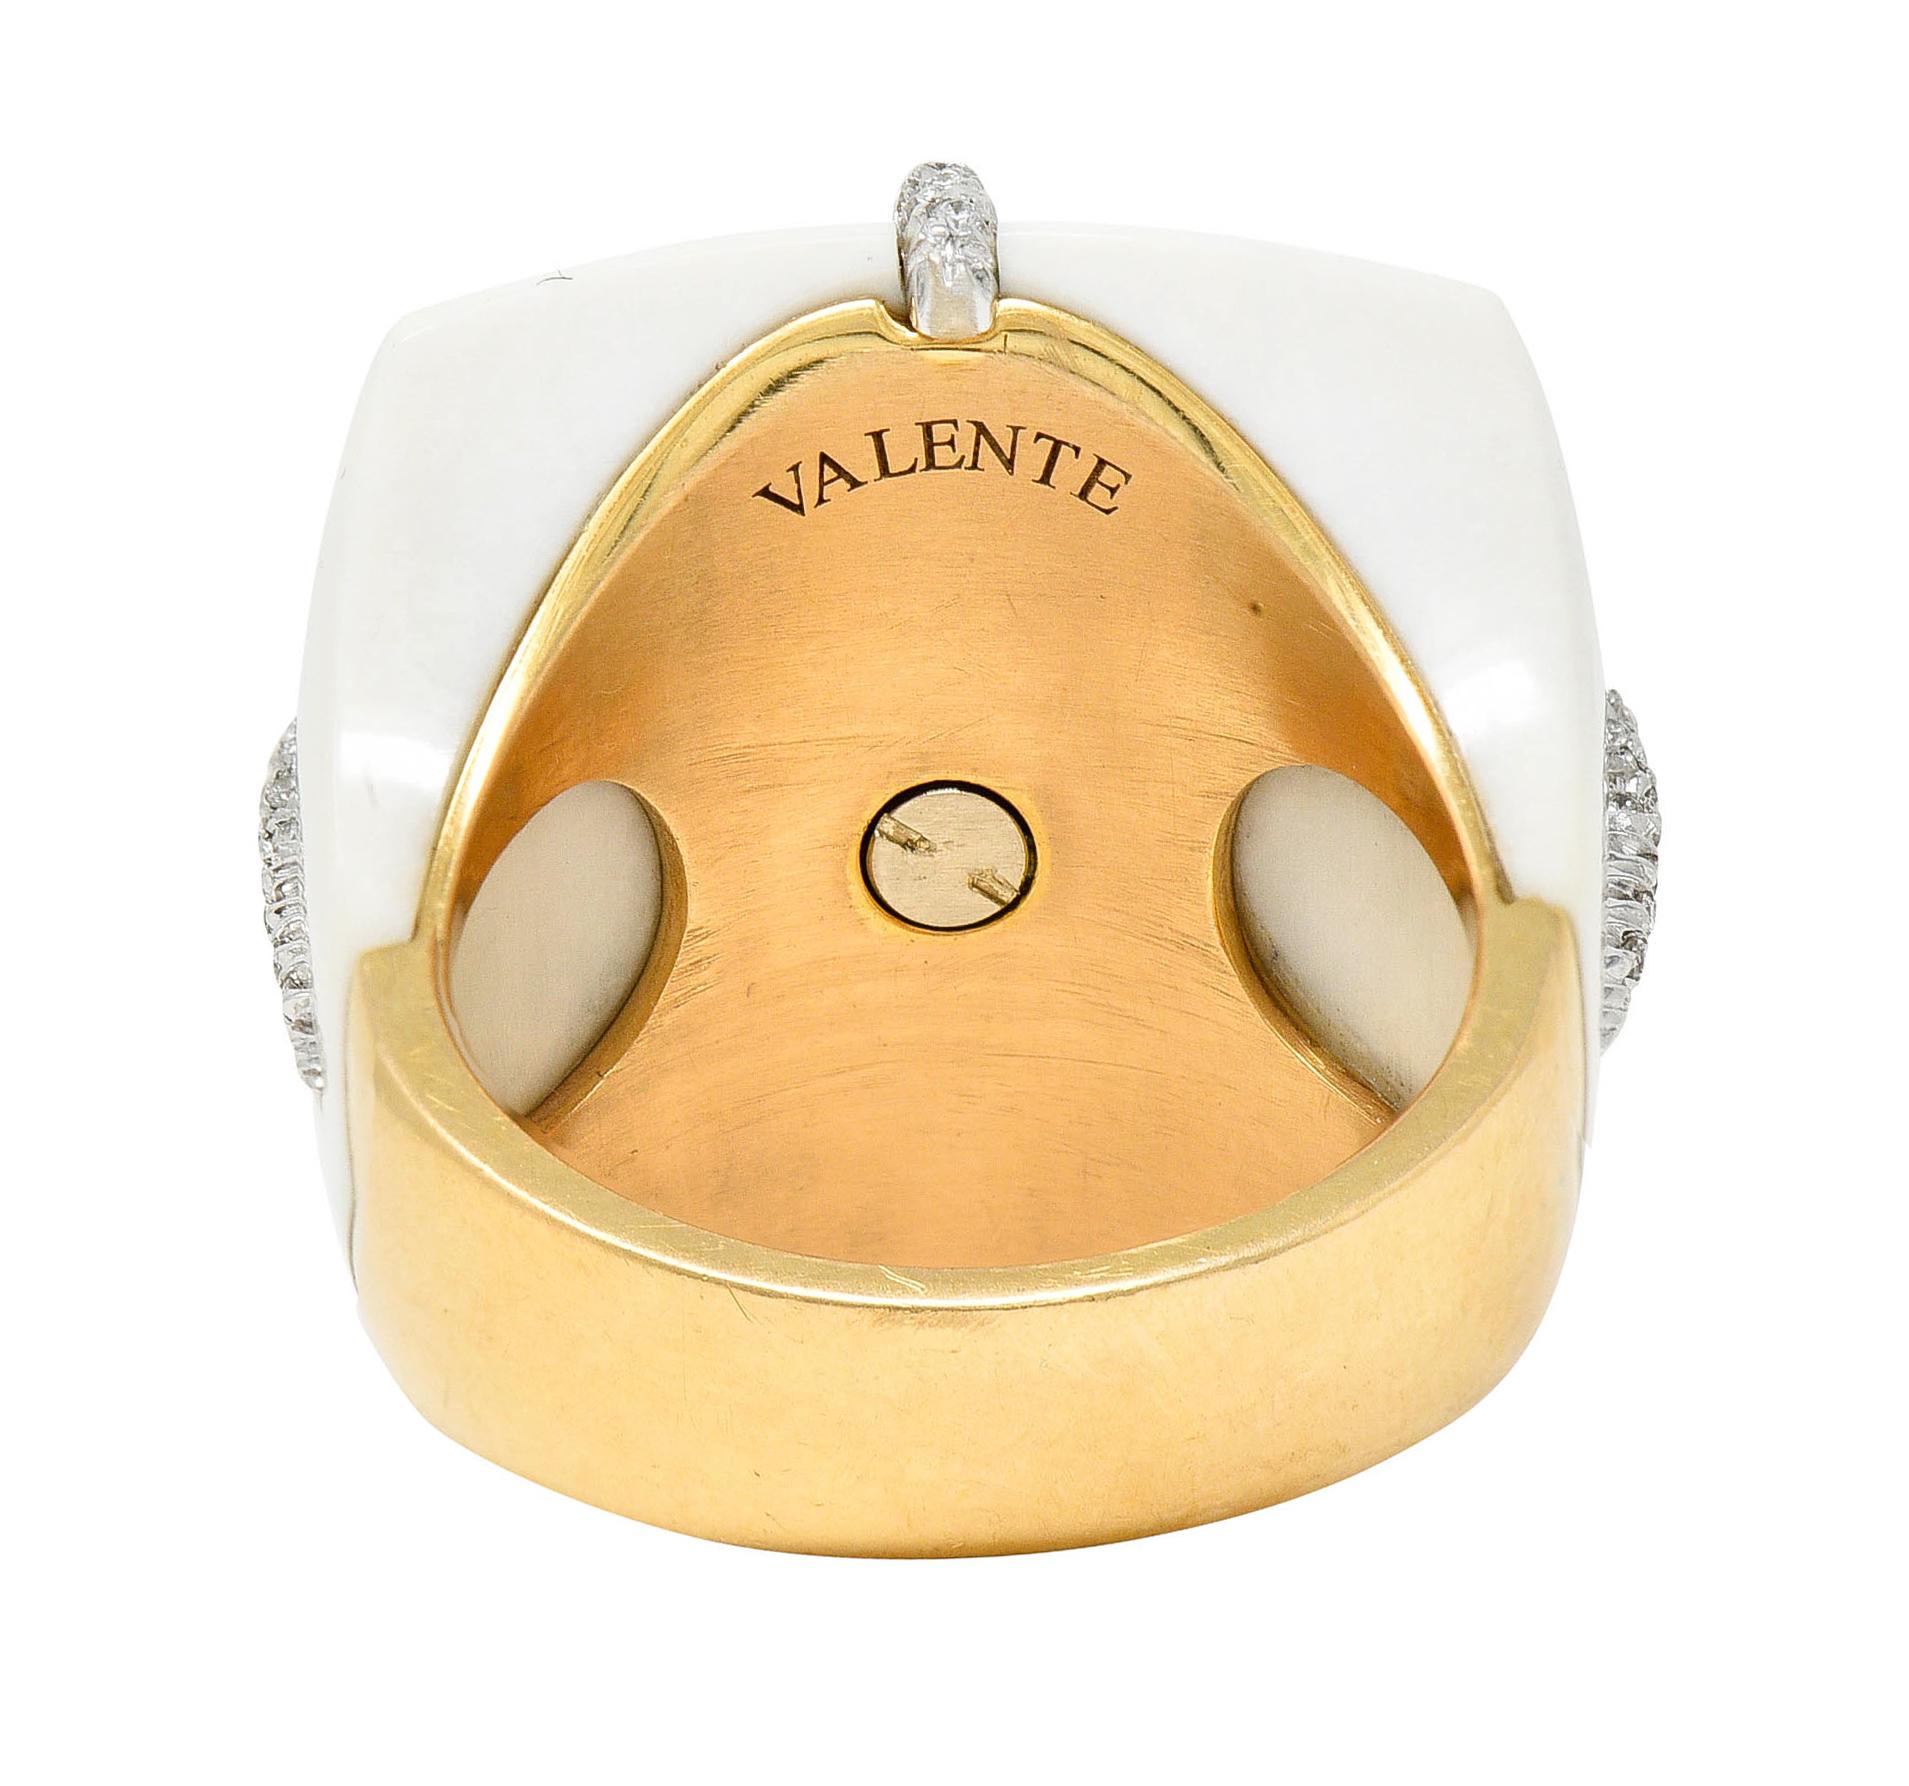 Brilliant Cut Valente Milano Diamond Amethyst Agate 18 Karat Gold Statement Ring